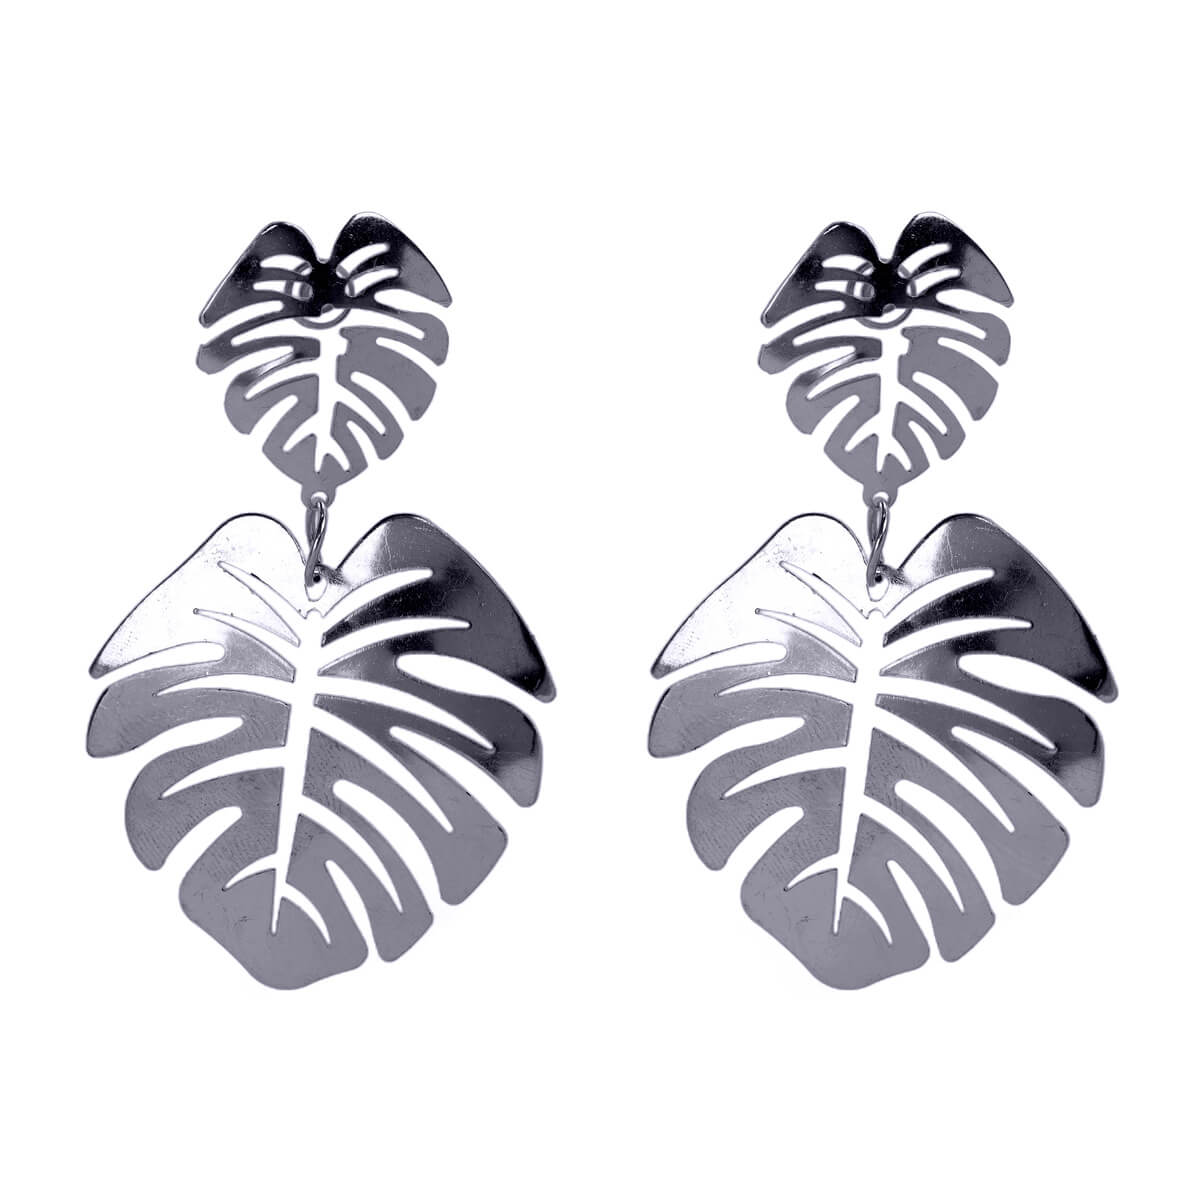 Big leaf earrings